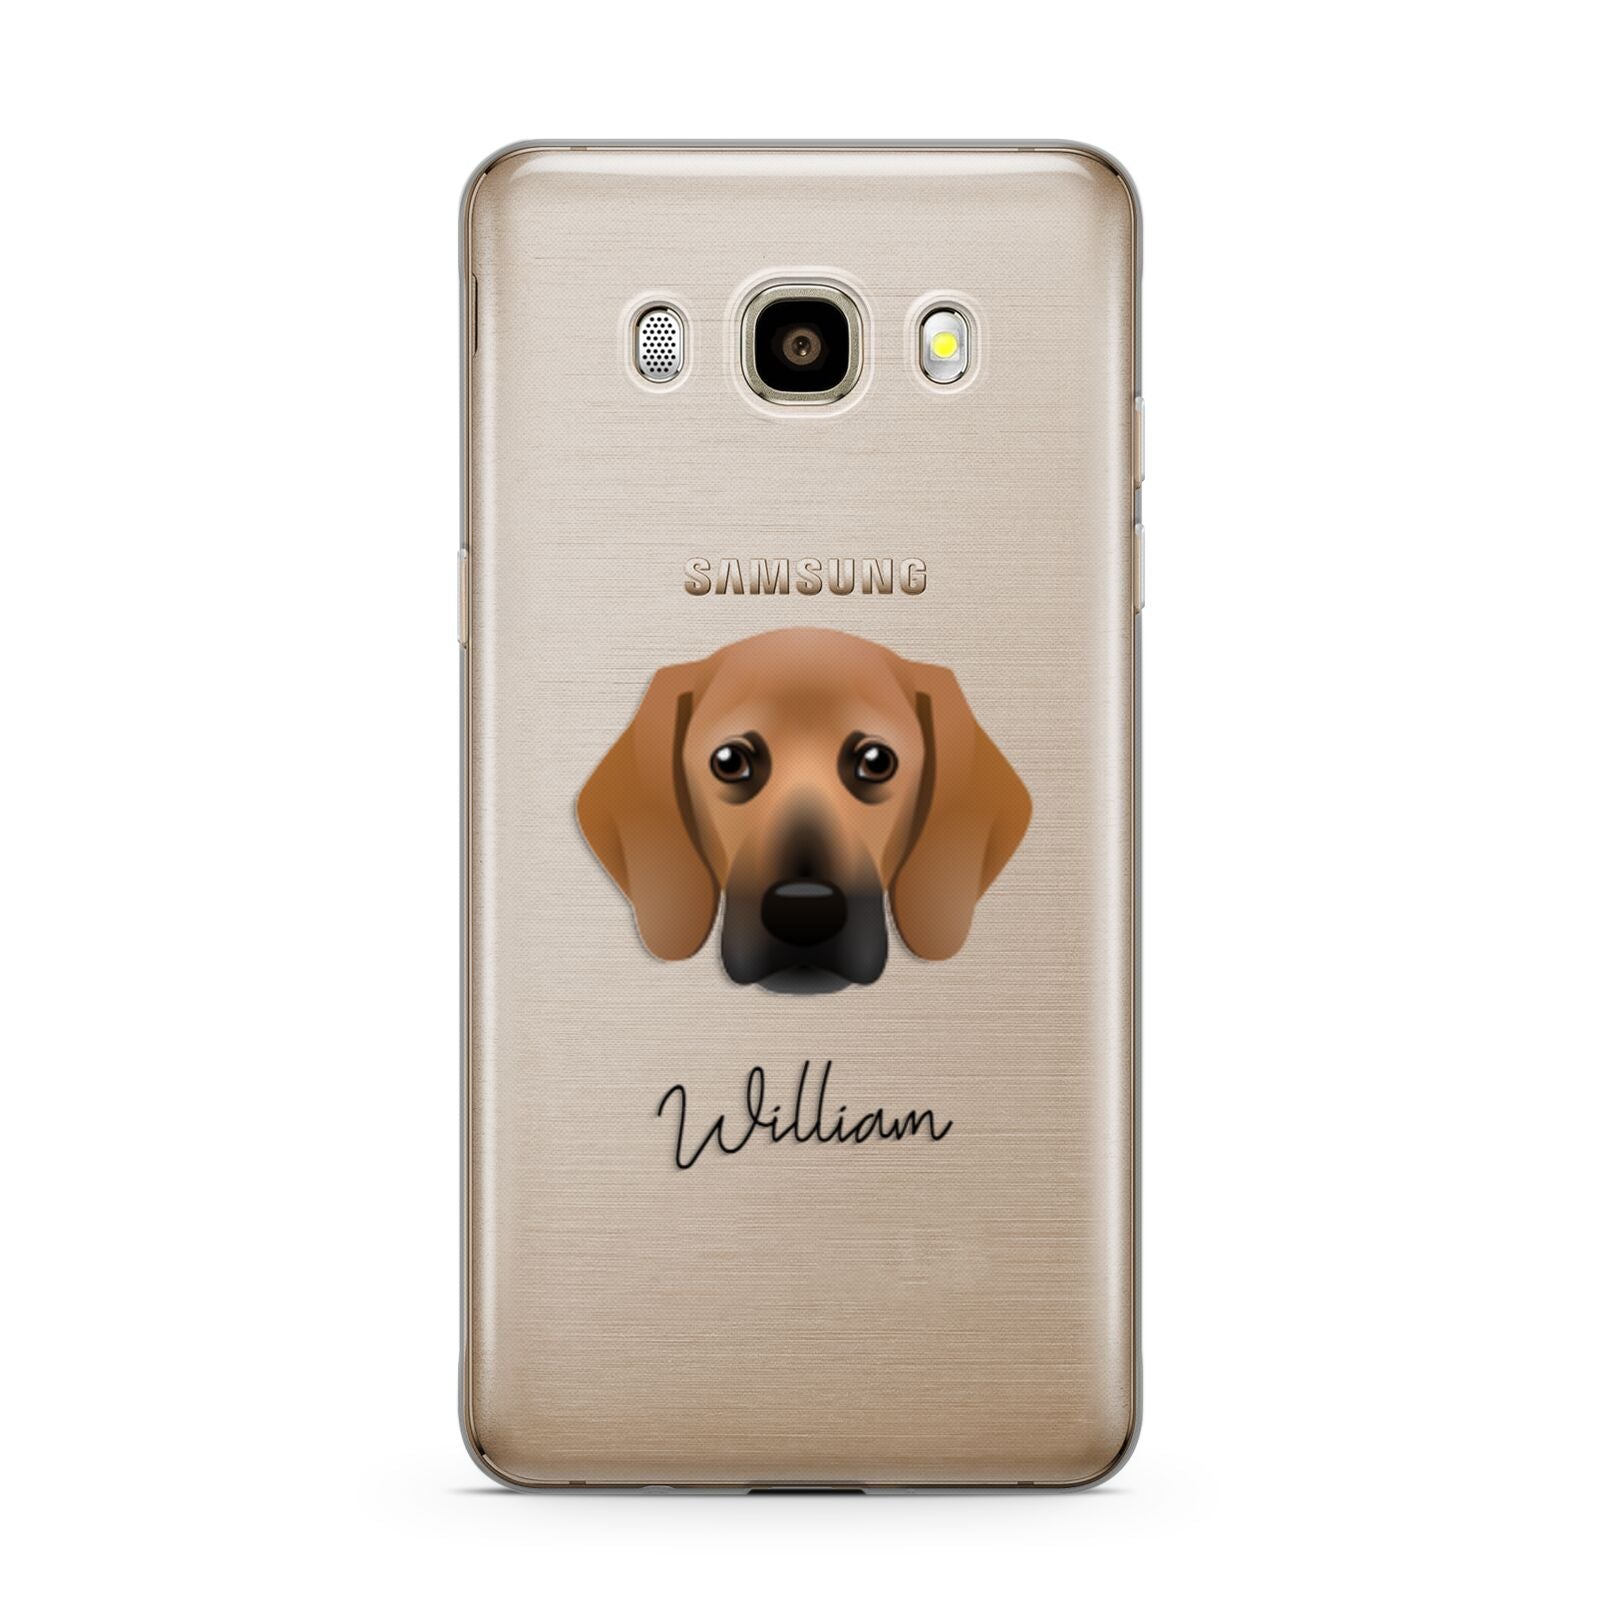 Bassugg Personalised Samsung Galaxy J7 2016 Case on gold phone